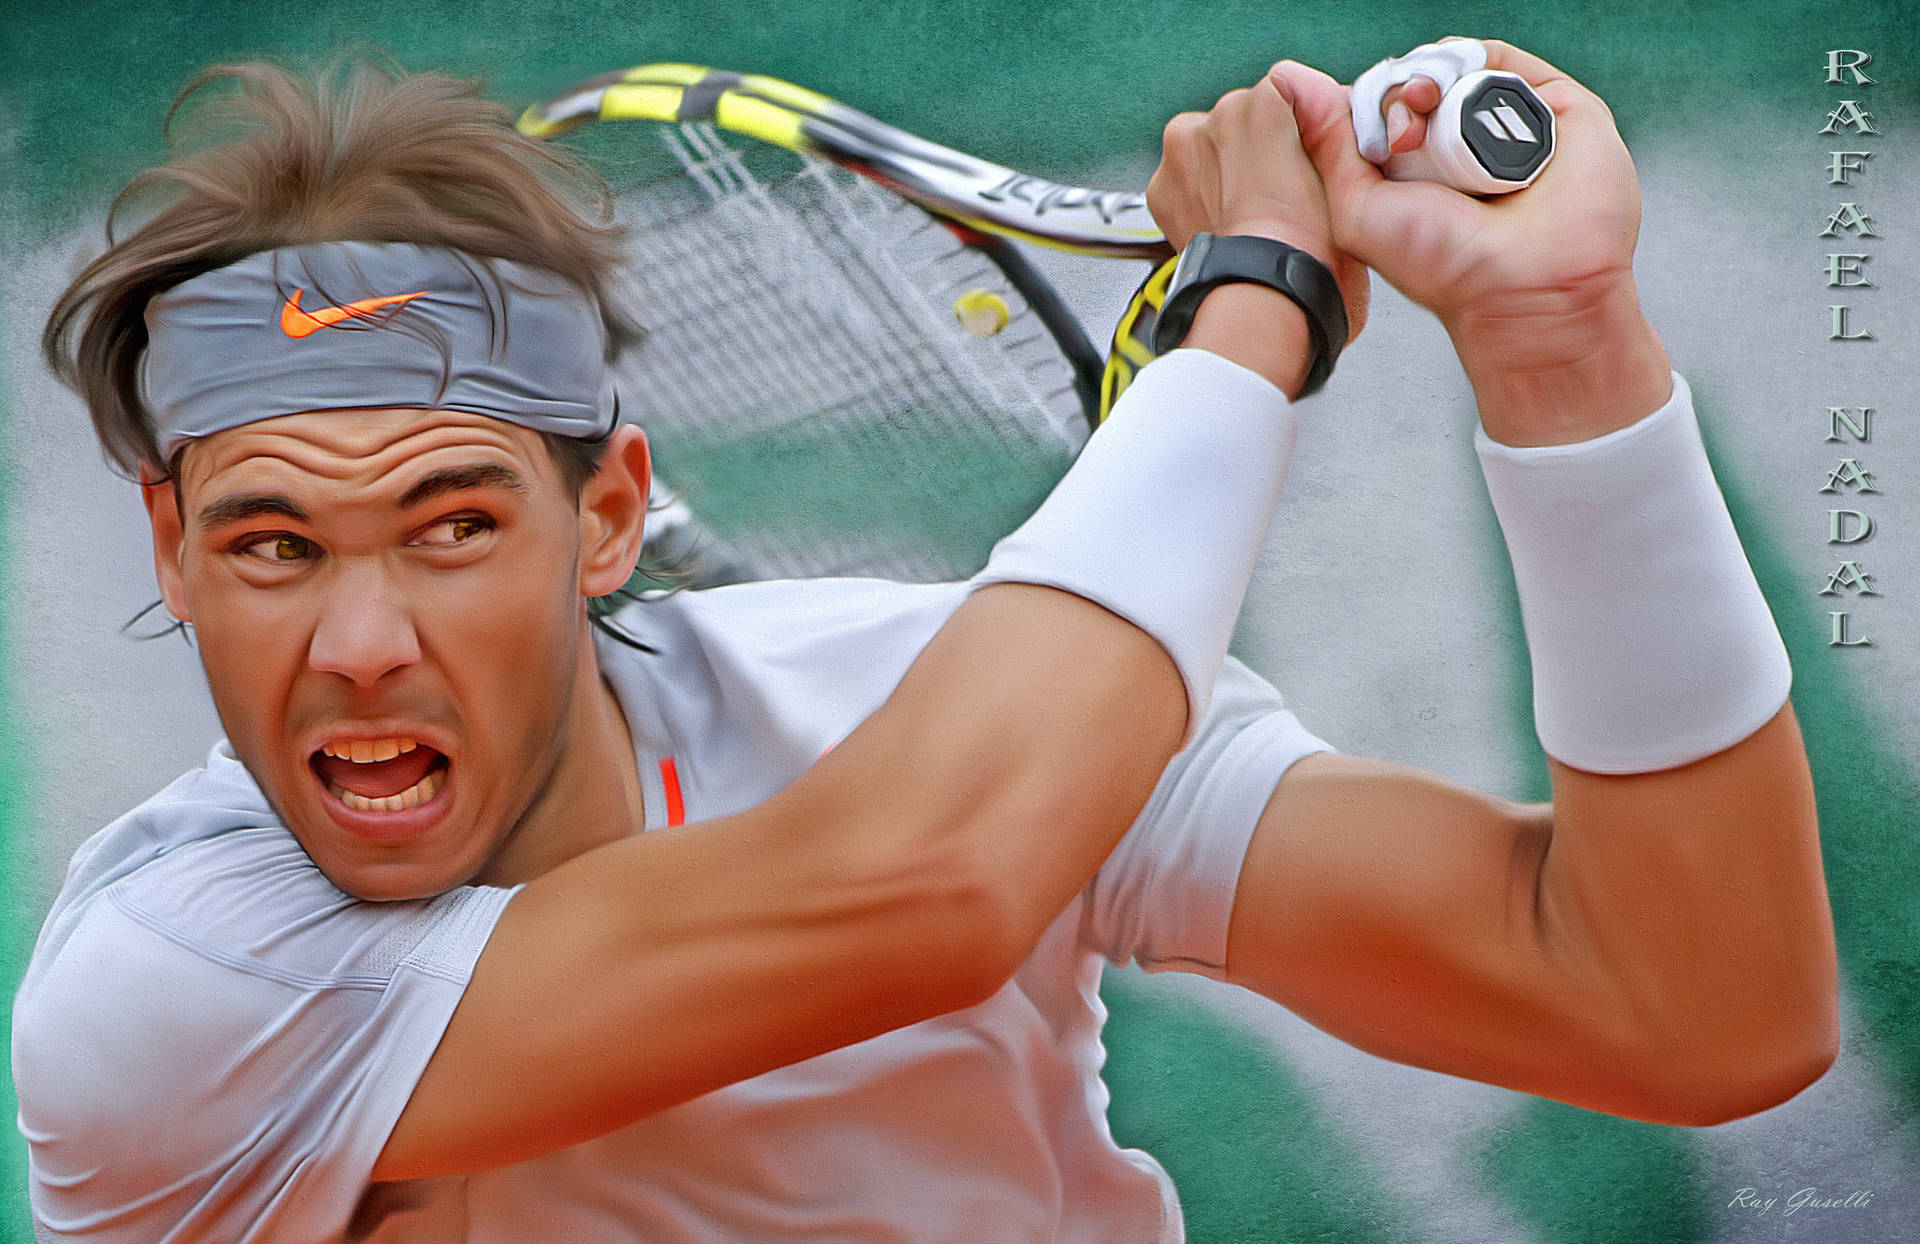 Rafael Nadal Tennis Match Poster